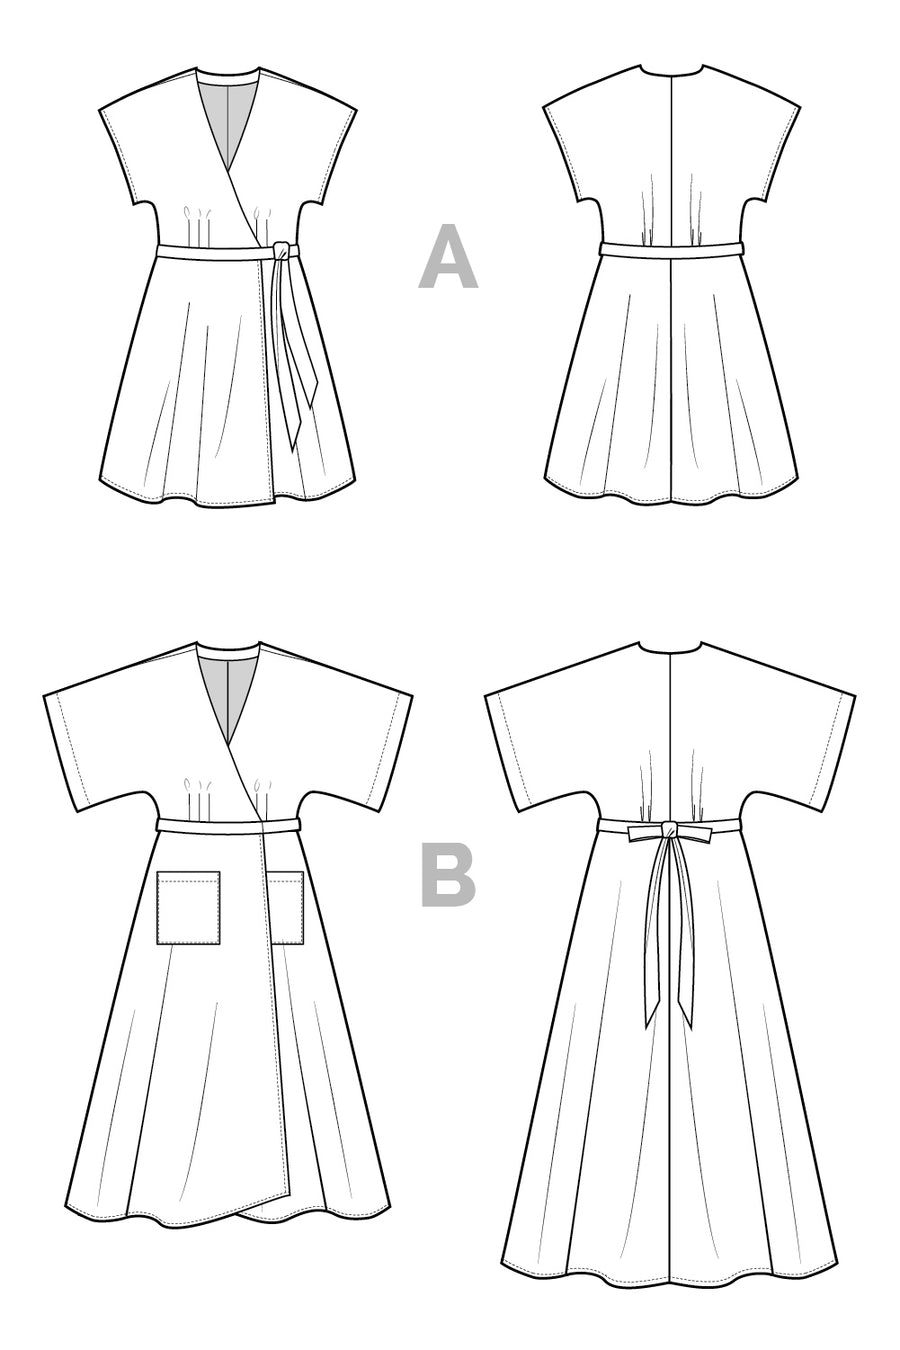 Drafting Dress Pattern #2 - Dresspatternmaking